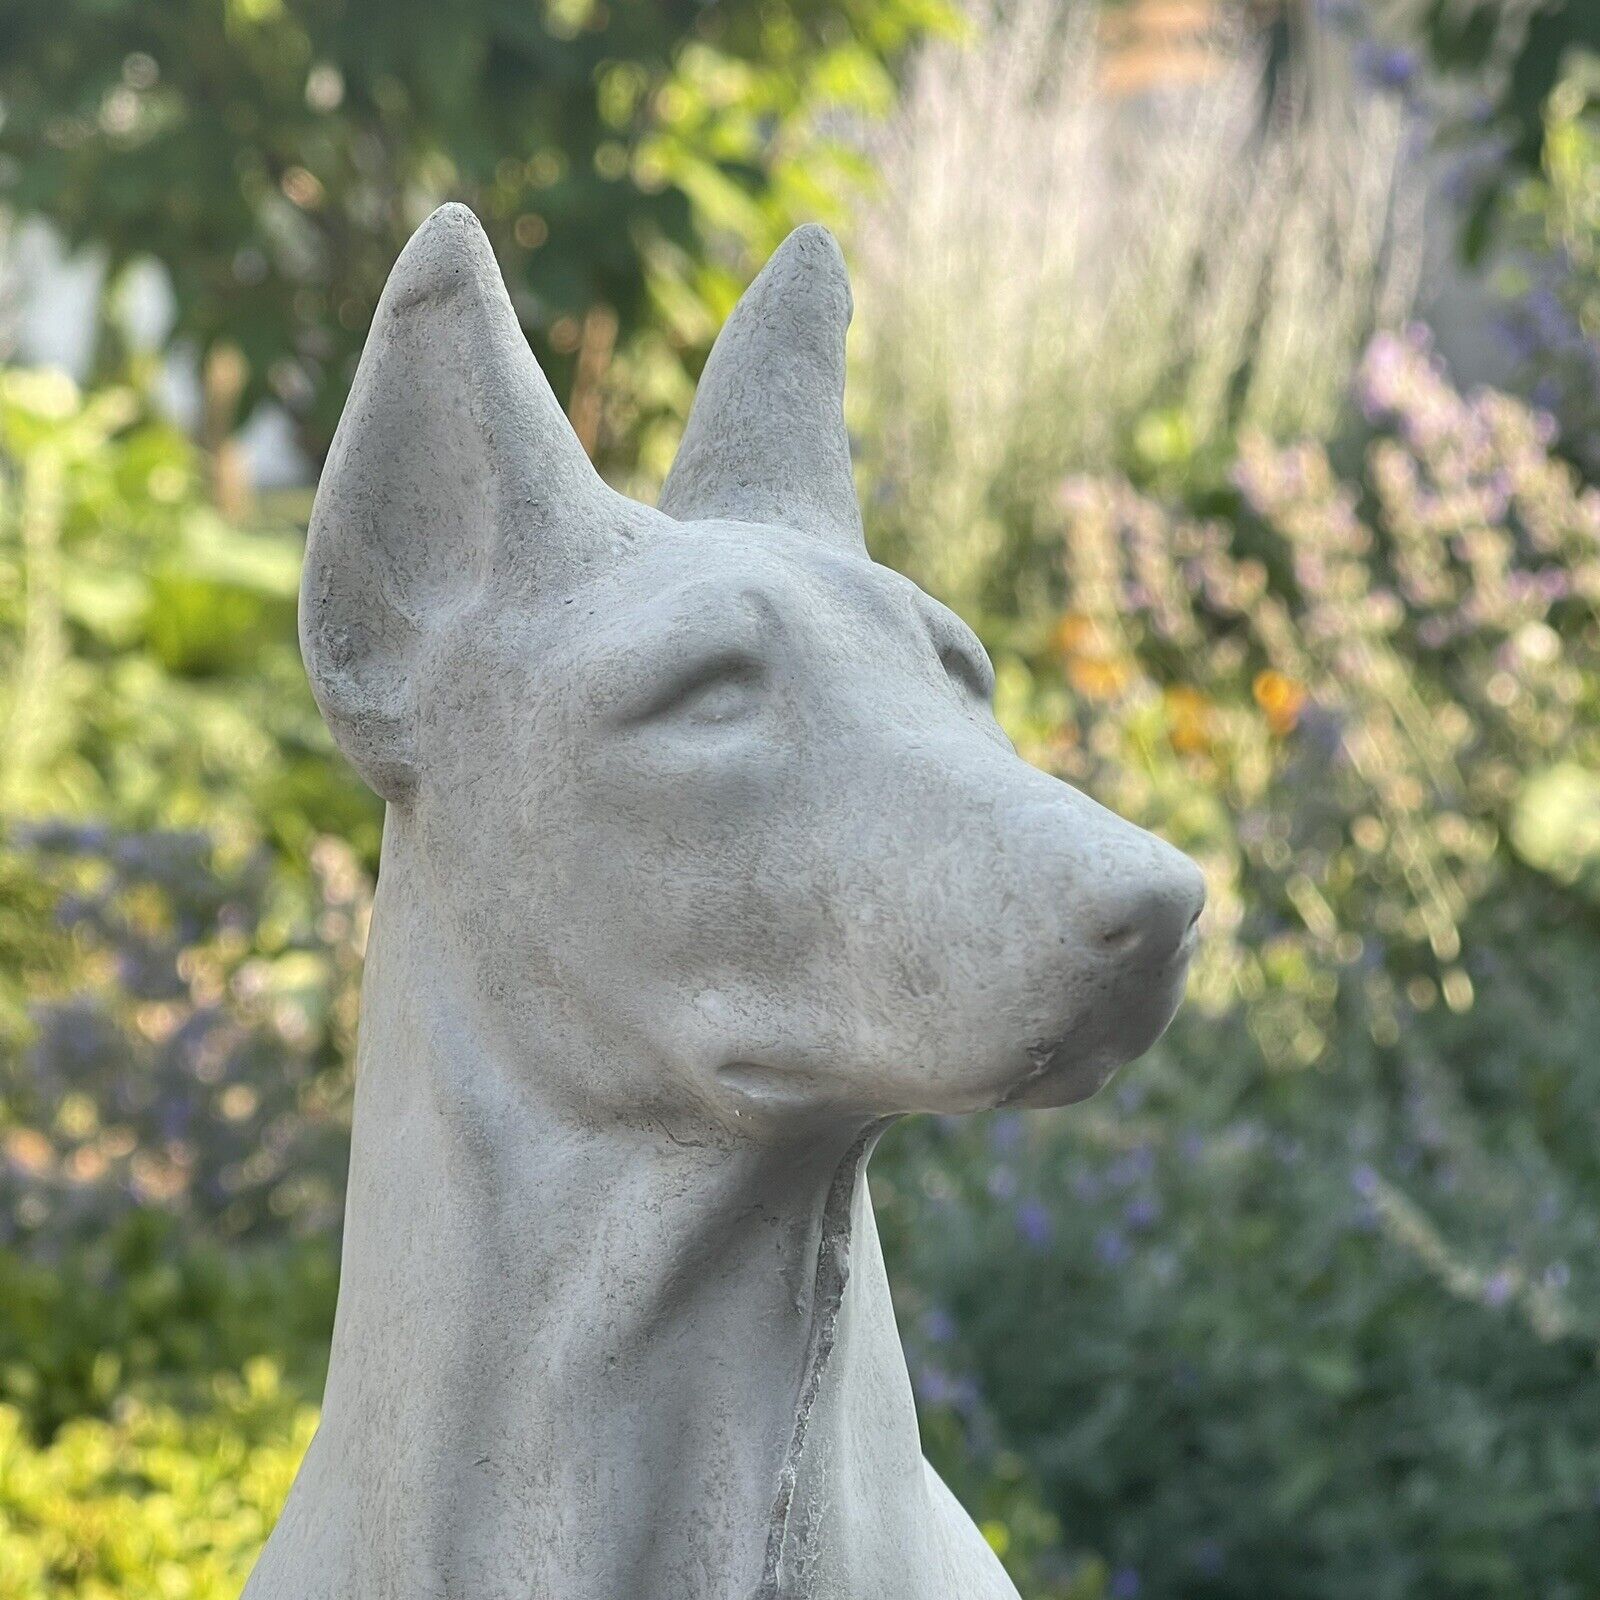 Concrete Doberman Pinscher Statue Outdoor Garden Memorial Sculpture Dog Figurine